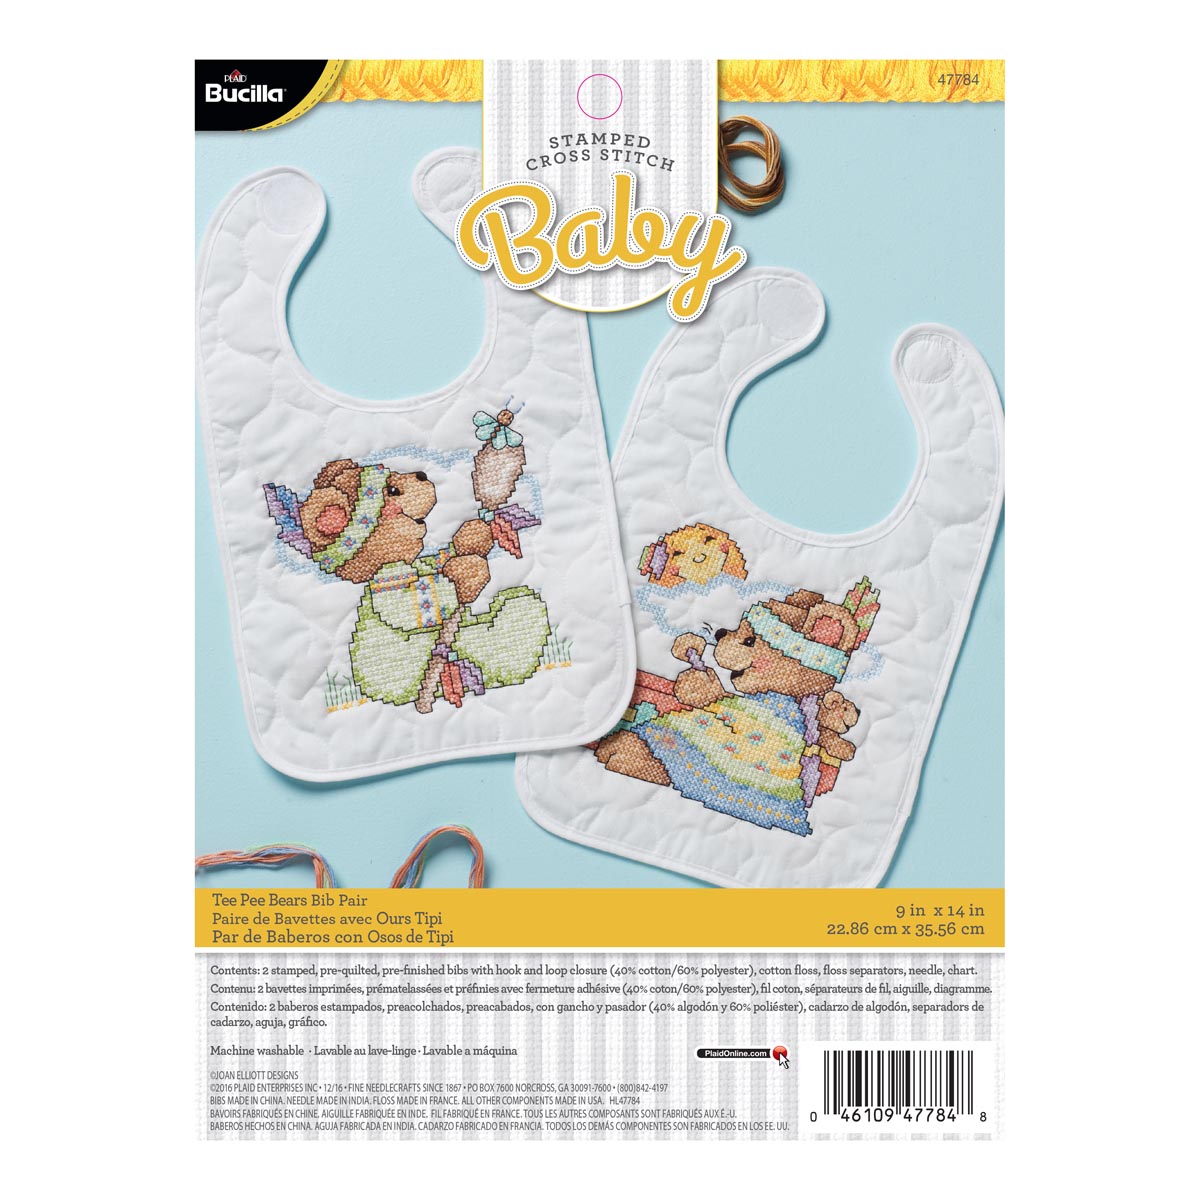 Bucilla ® Baby - Stamped Cross Stitch - Crib Ensembles - Tee Pee Bears Bib Pair Kit - 47784